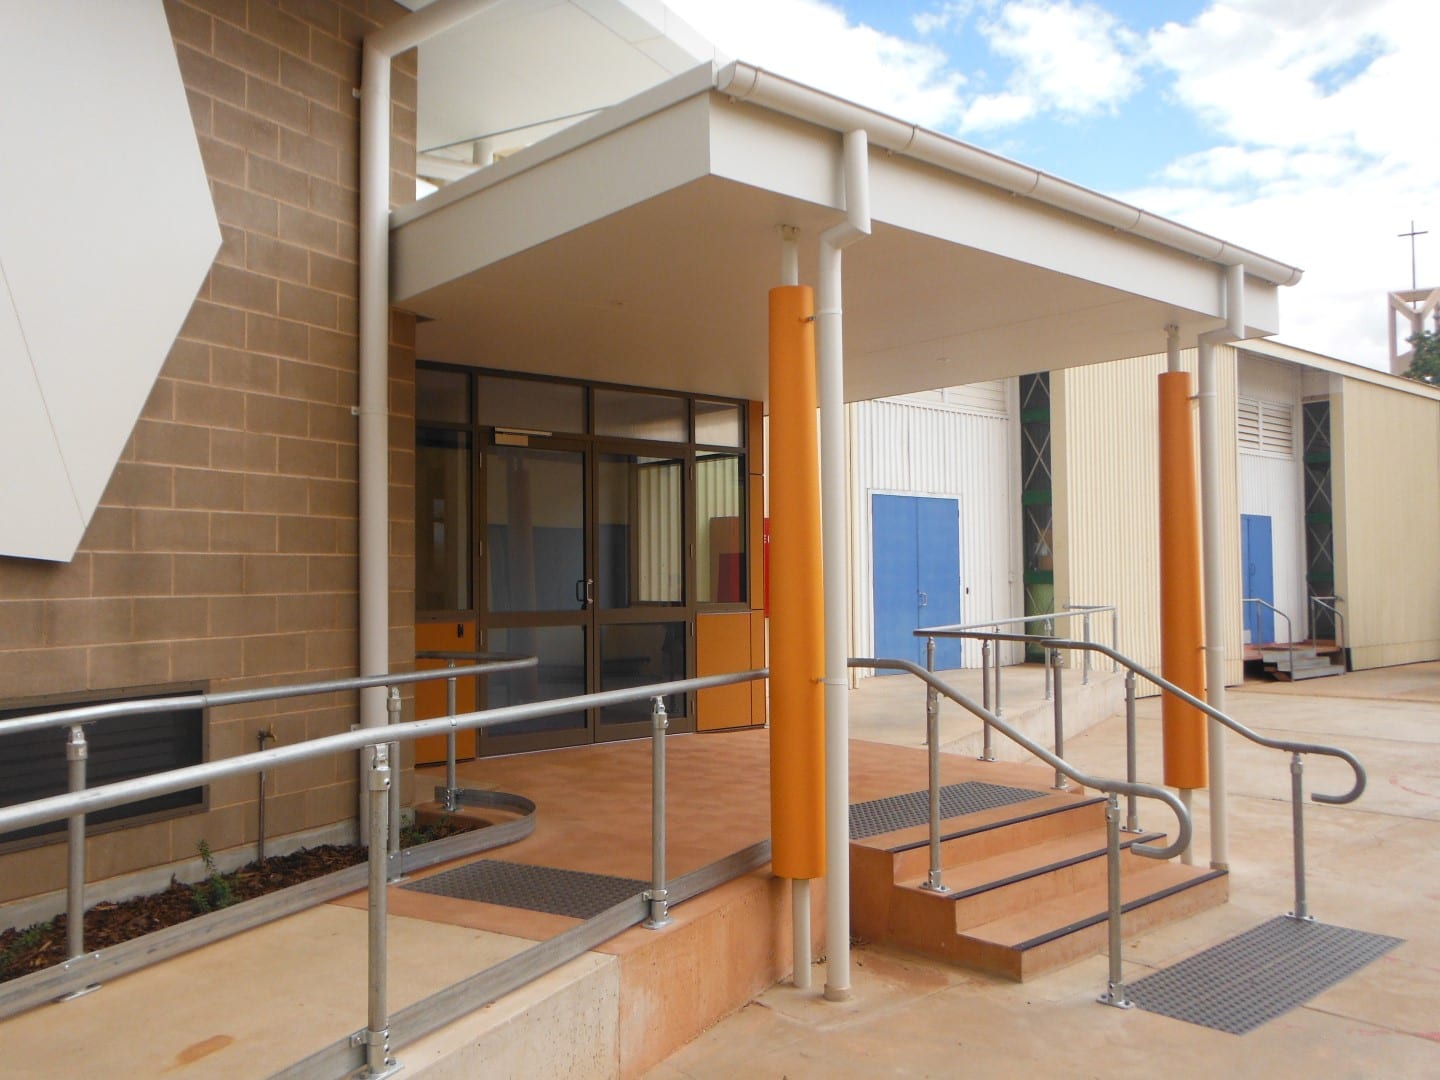 Admin Building Construction in Alice Springs